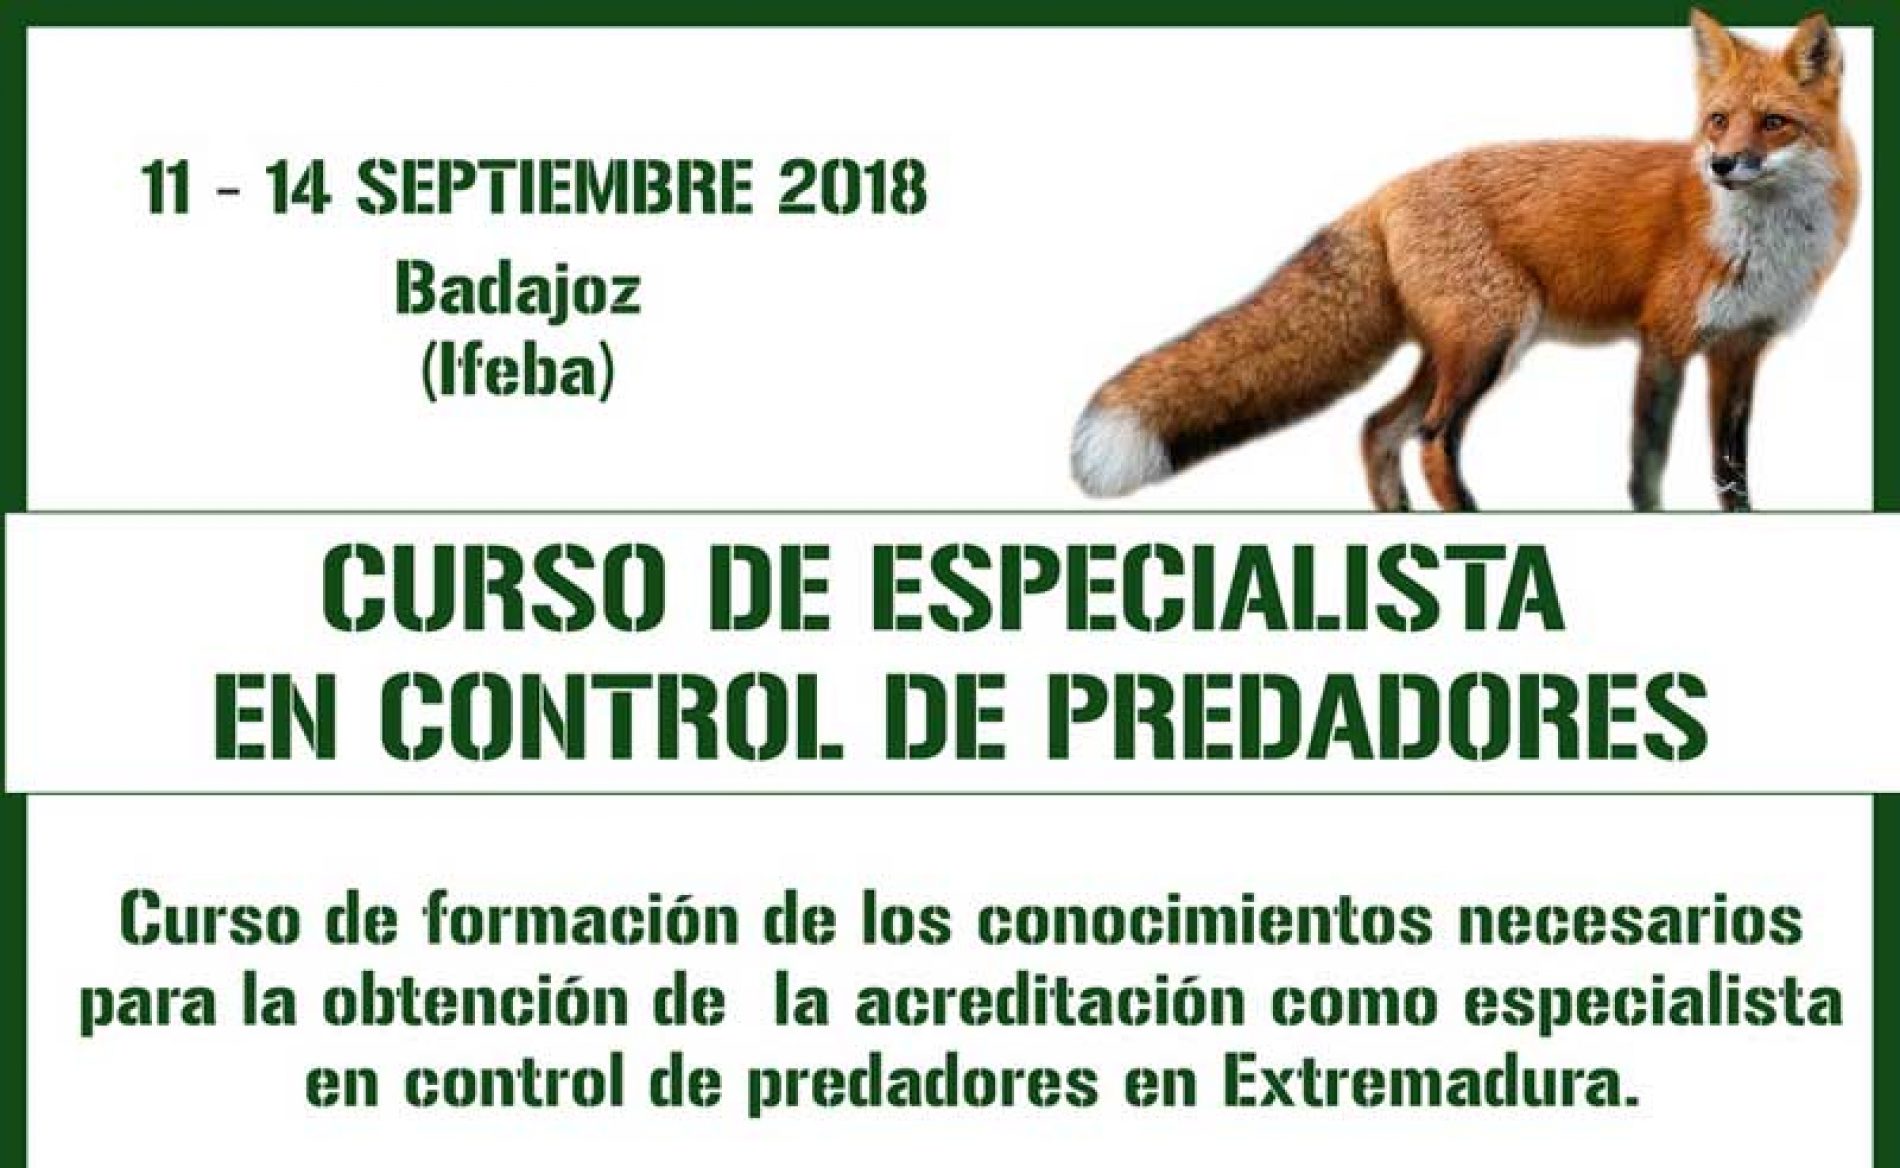 Badajoz acogerá un septiembre un curso de especialista en control de predadores